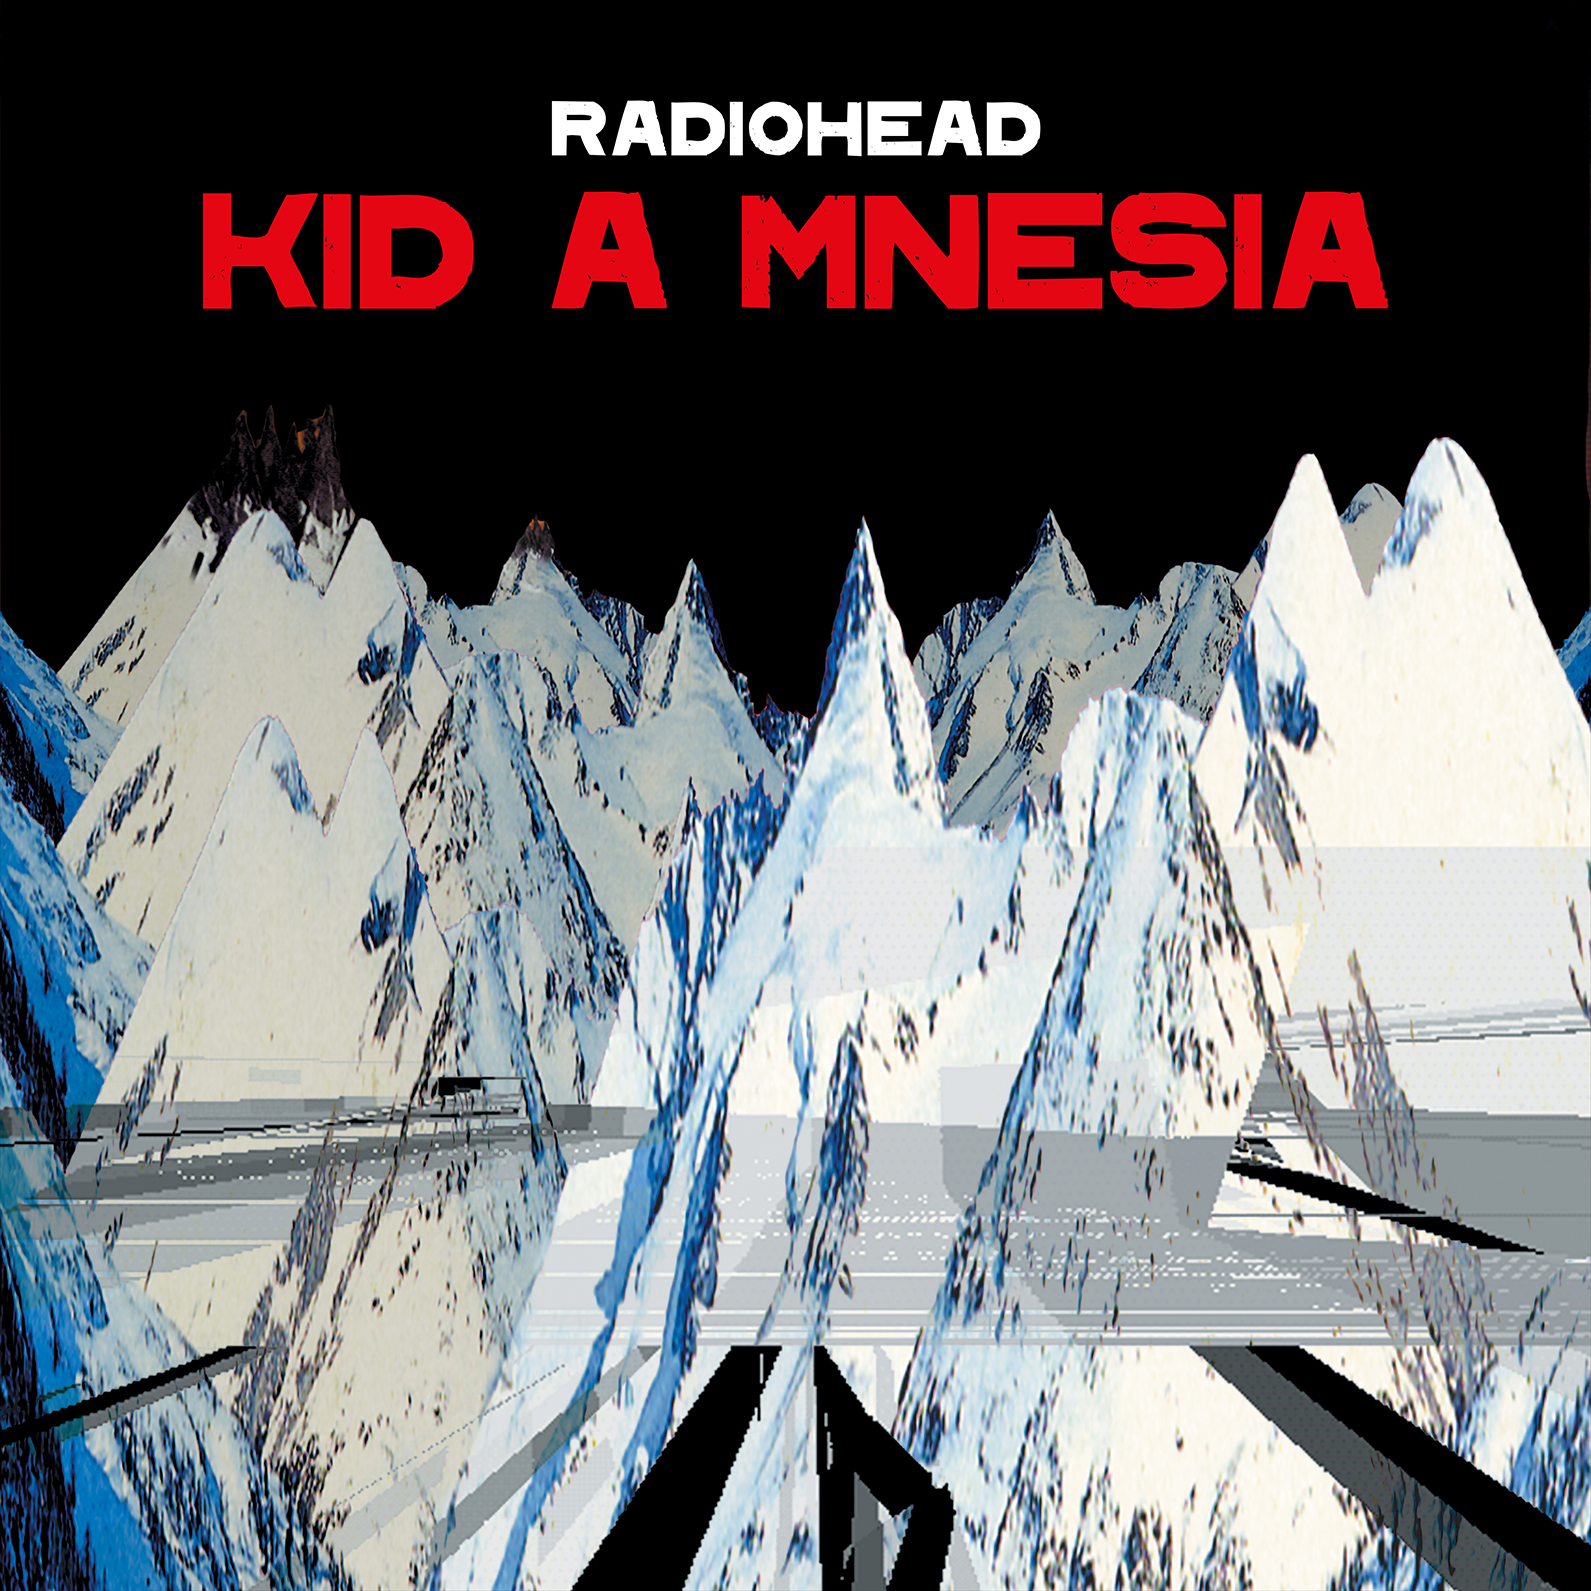 RADIOHEAD announce KID A MNESIA 21st anniversary triple album editions 